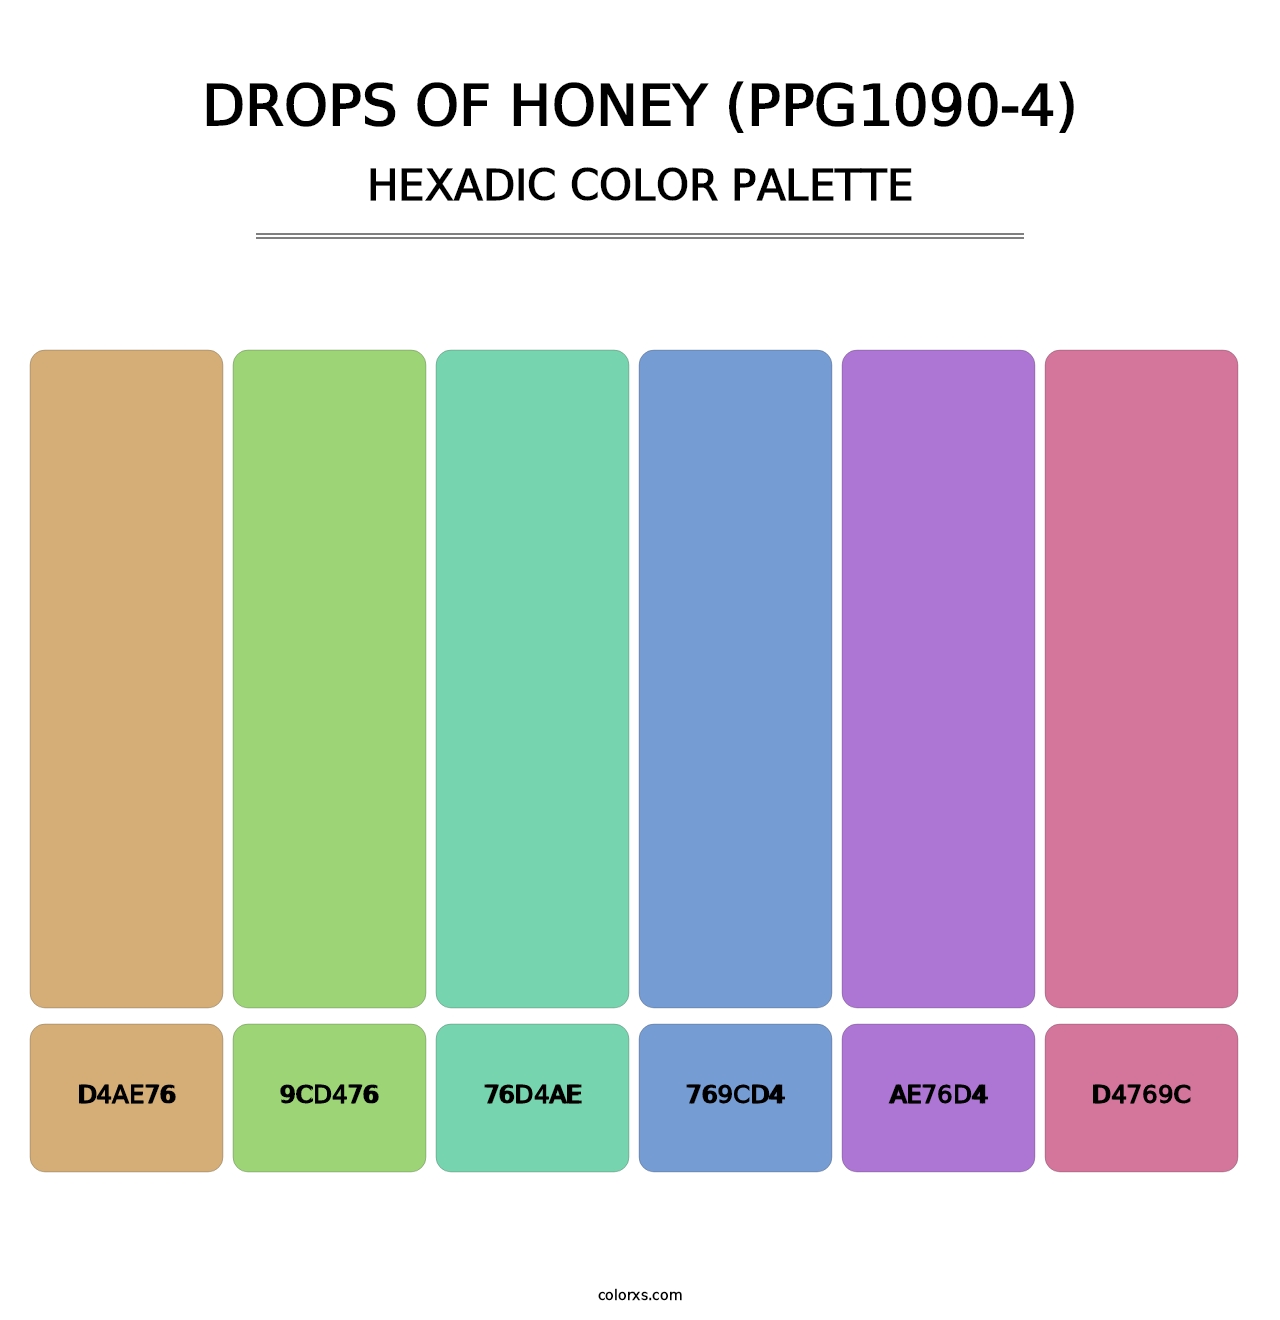 Drops Of Honey (PPG1090-4) - Hexadic Color Palette